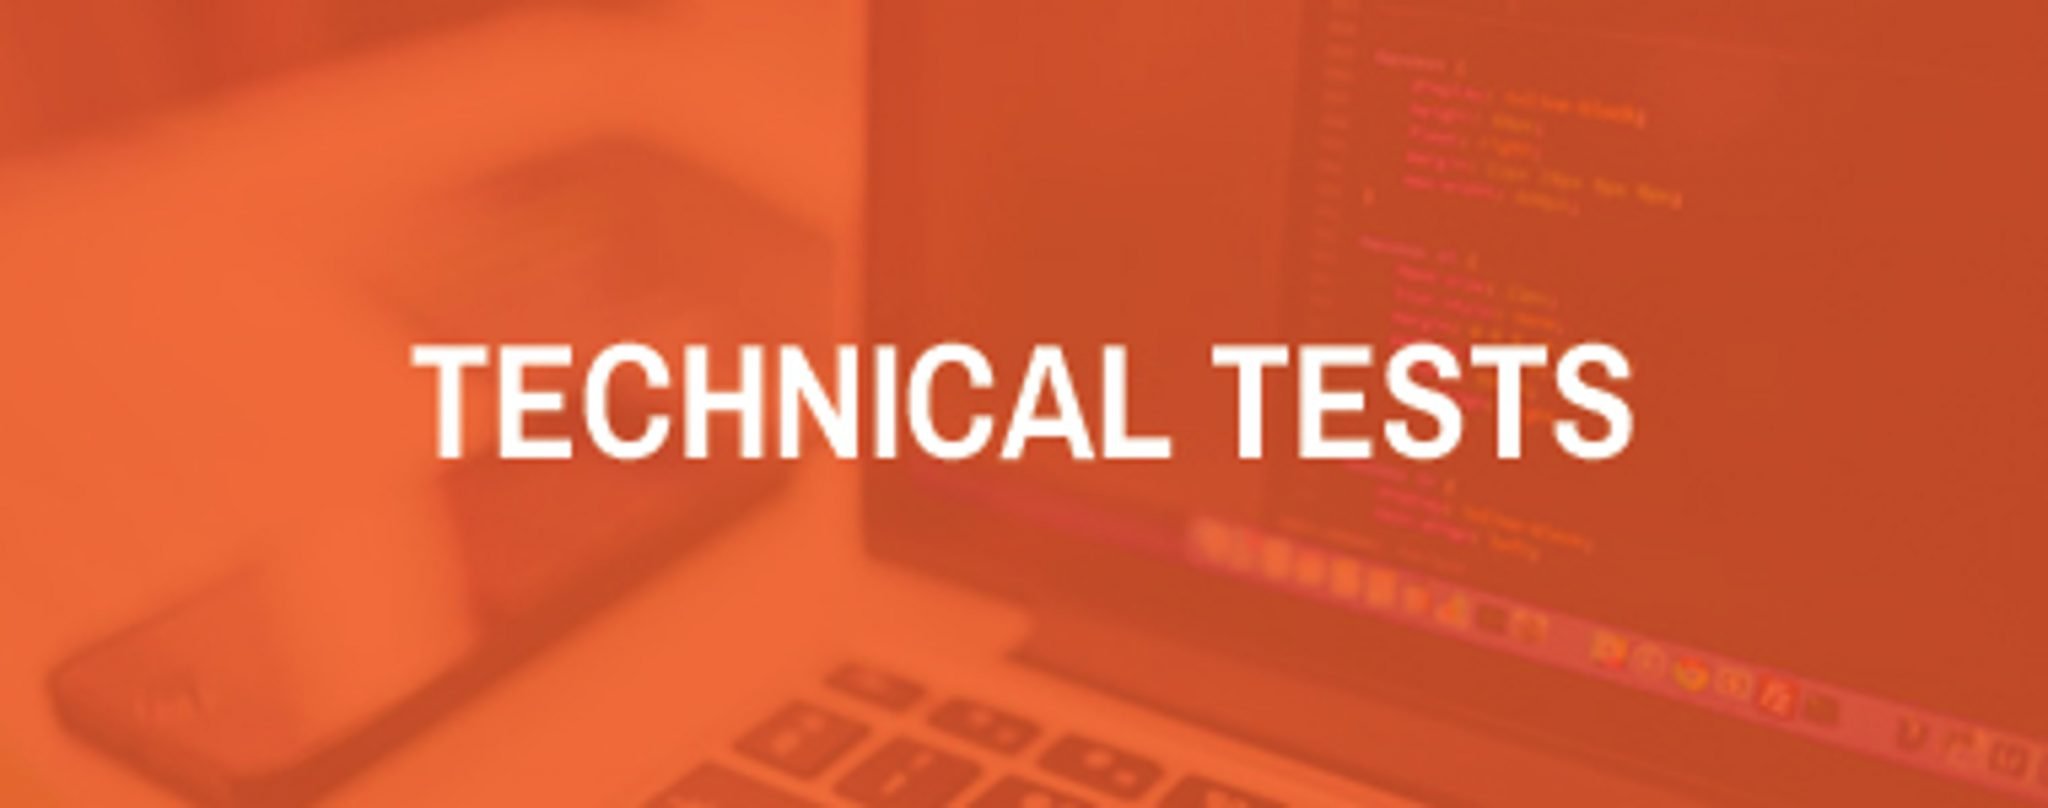 Technical test